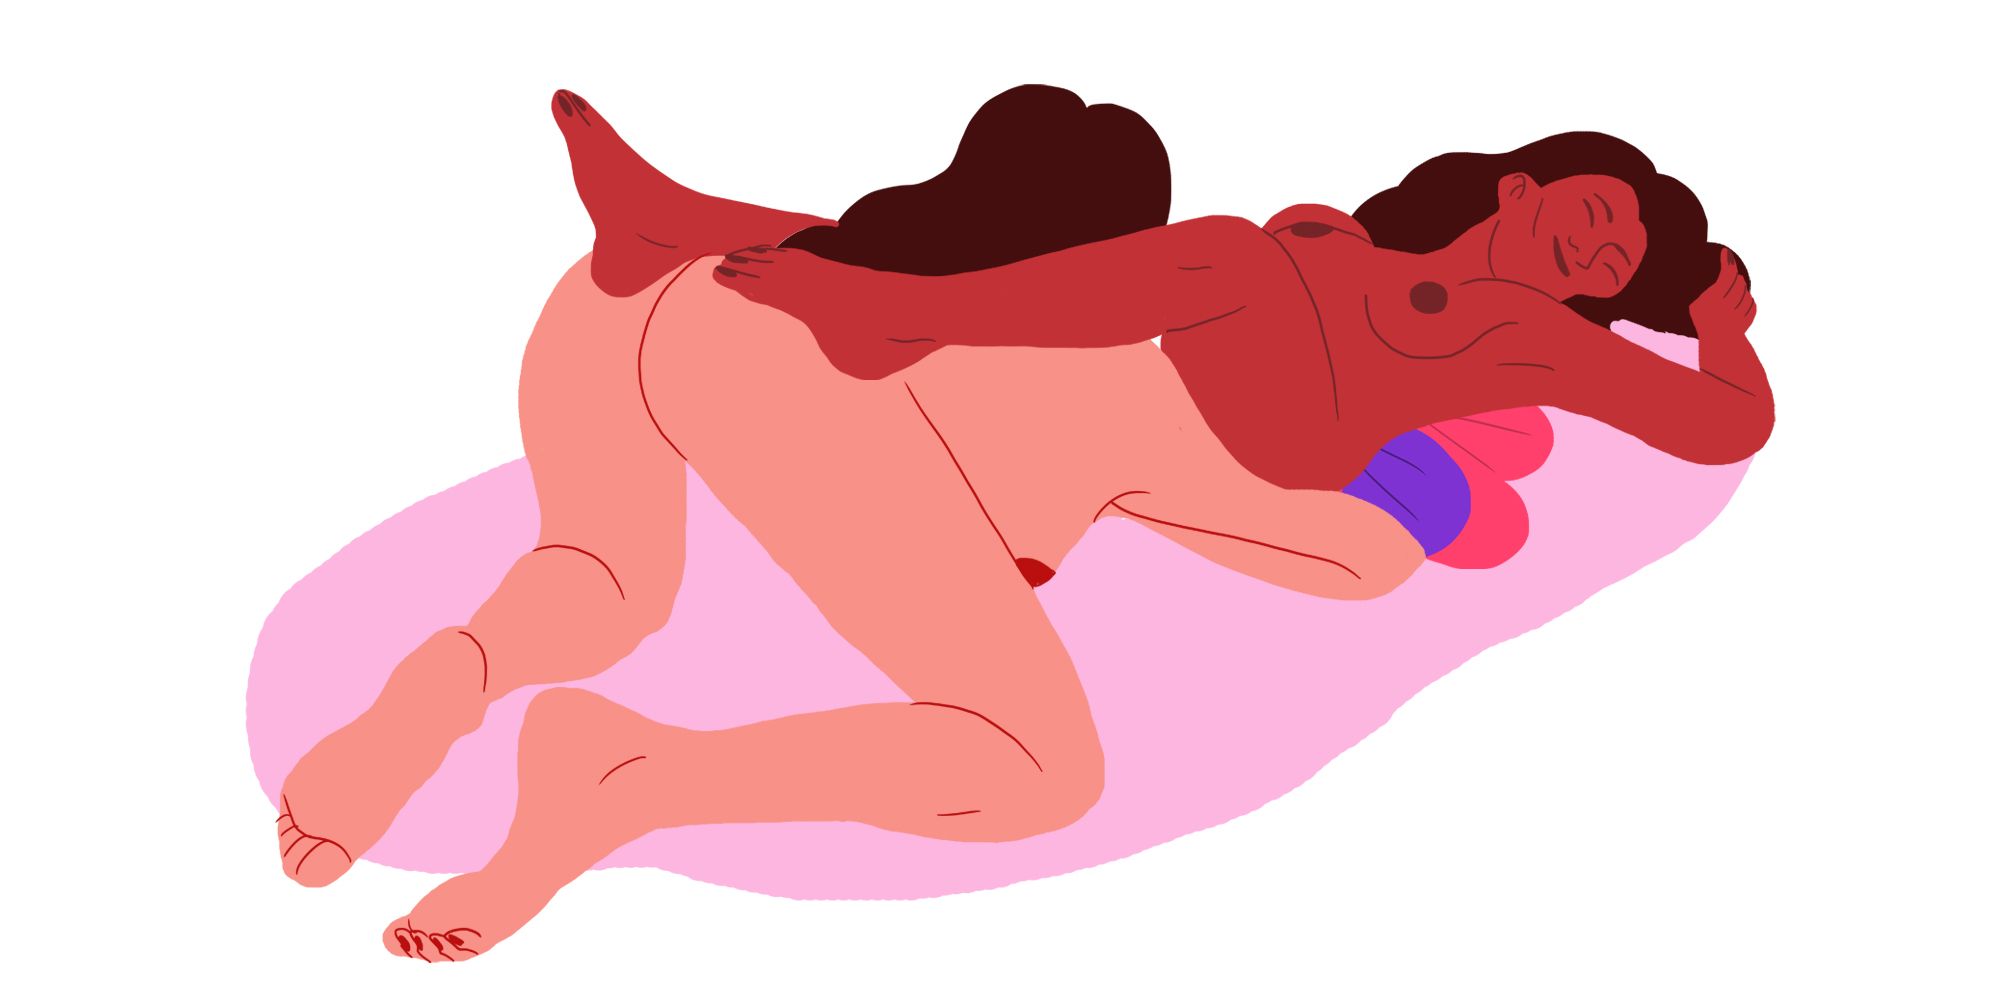 Cartoon Lesbians Porn Massage - 37 Hot Lesbian Sex Positions - Best Lesbian Sex Ideas and Positions